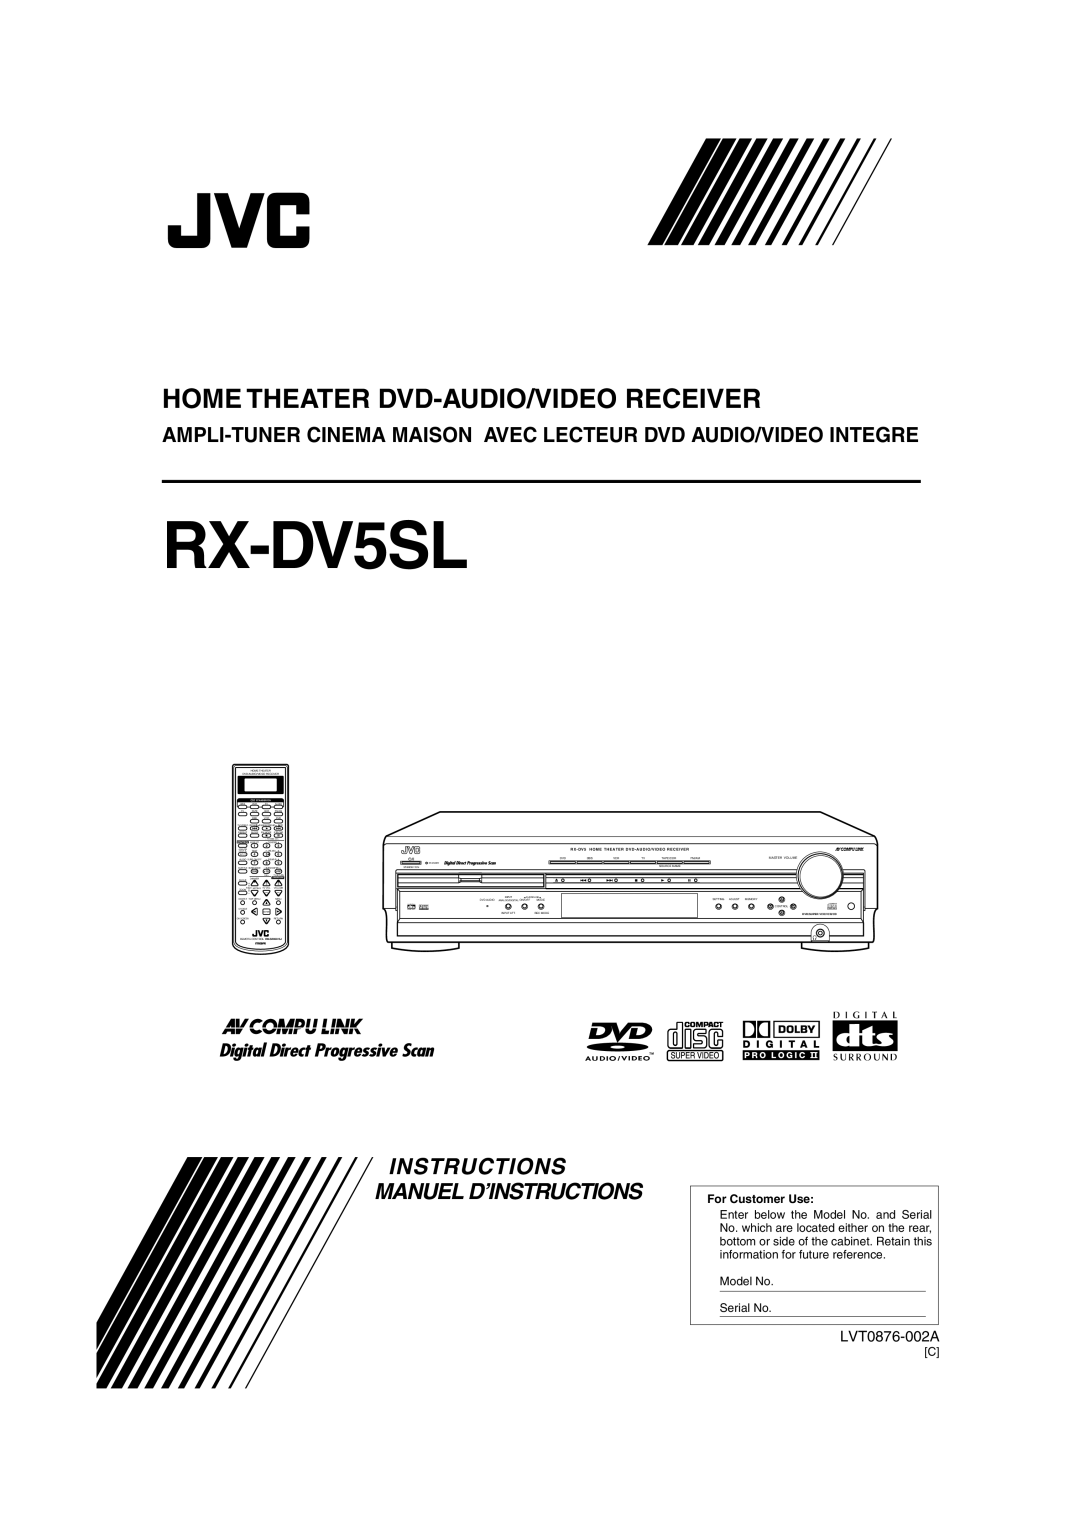 JVC RX-DV5SL manual Home Theater Dvd-Audio/Videoreceiver, Instructions Manuel D’Instructions, LVT0876-002A, Standby/On 